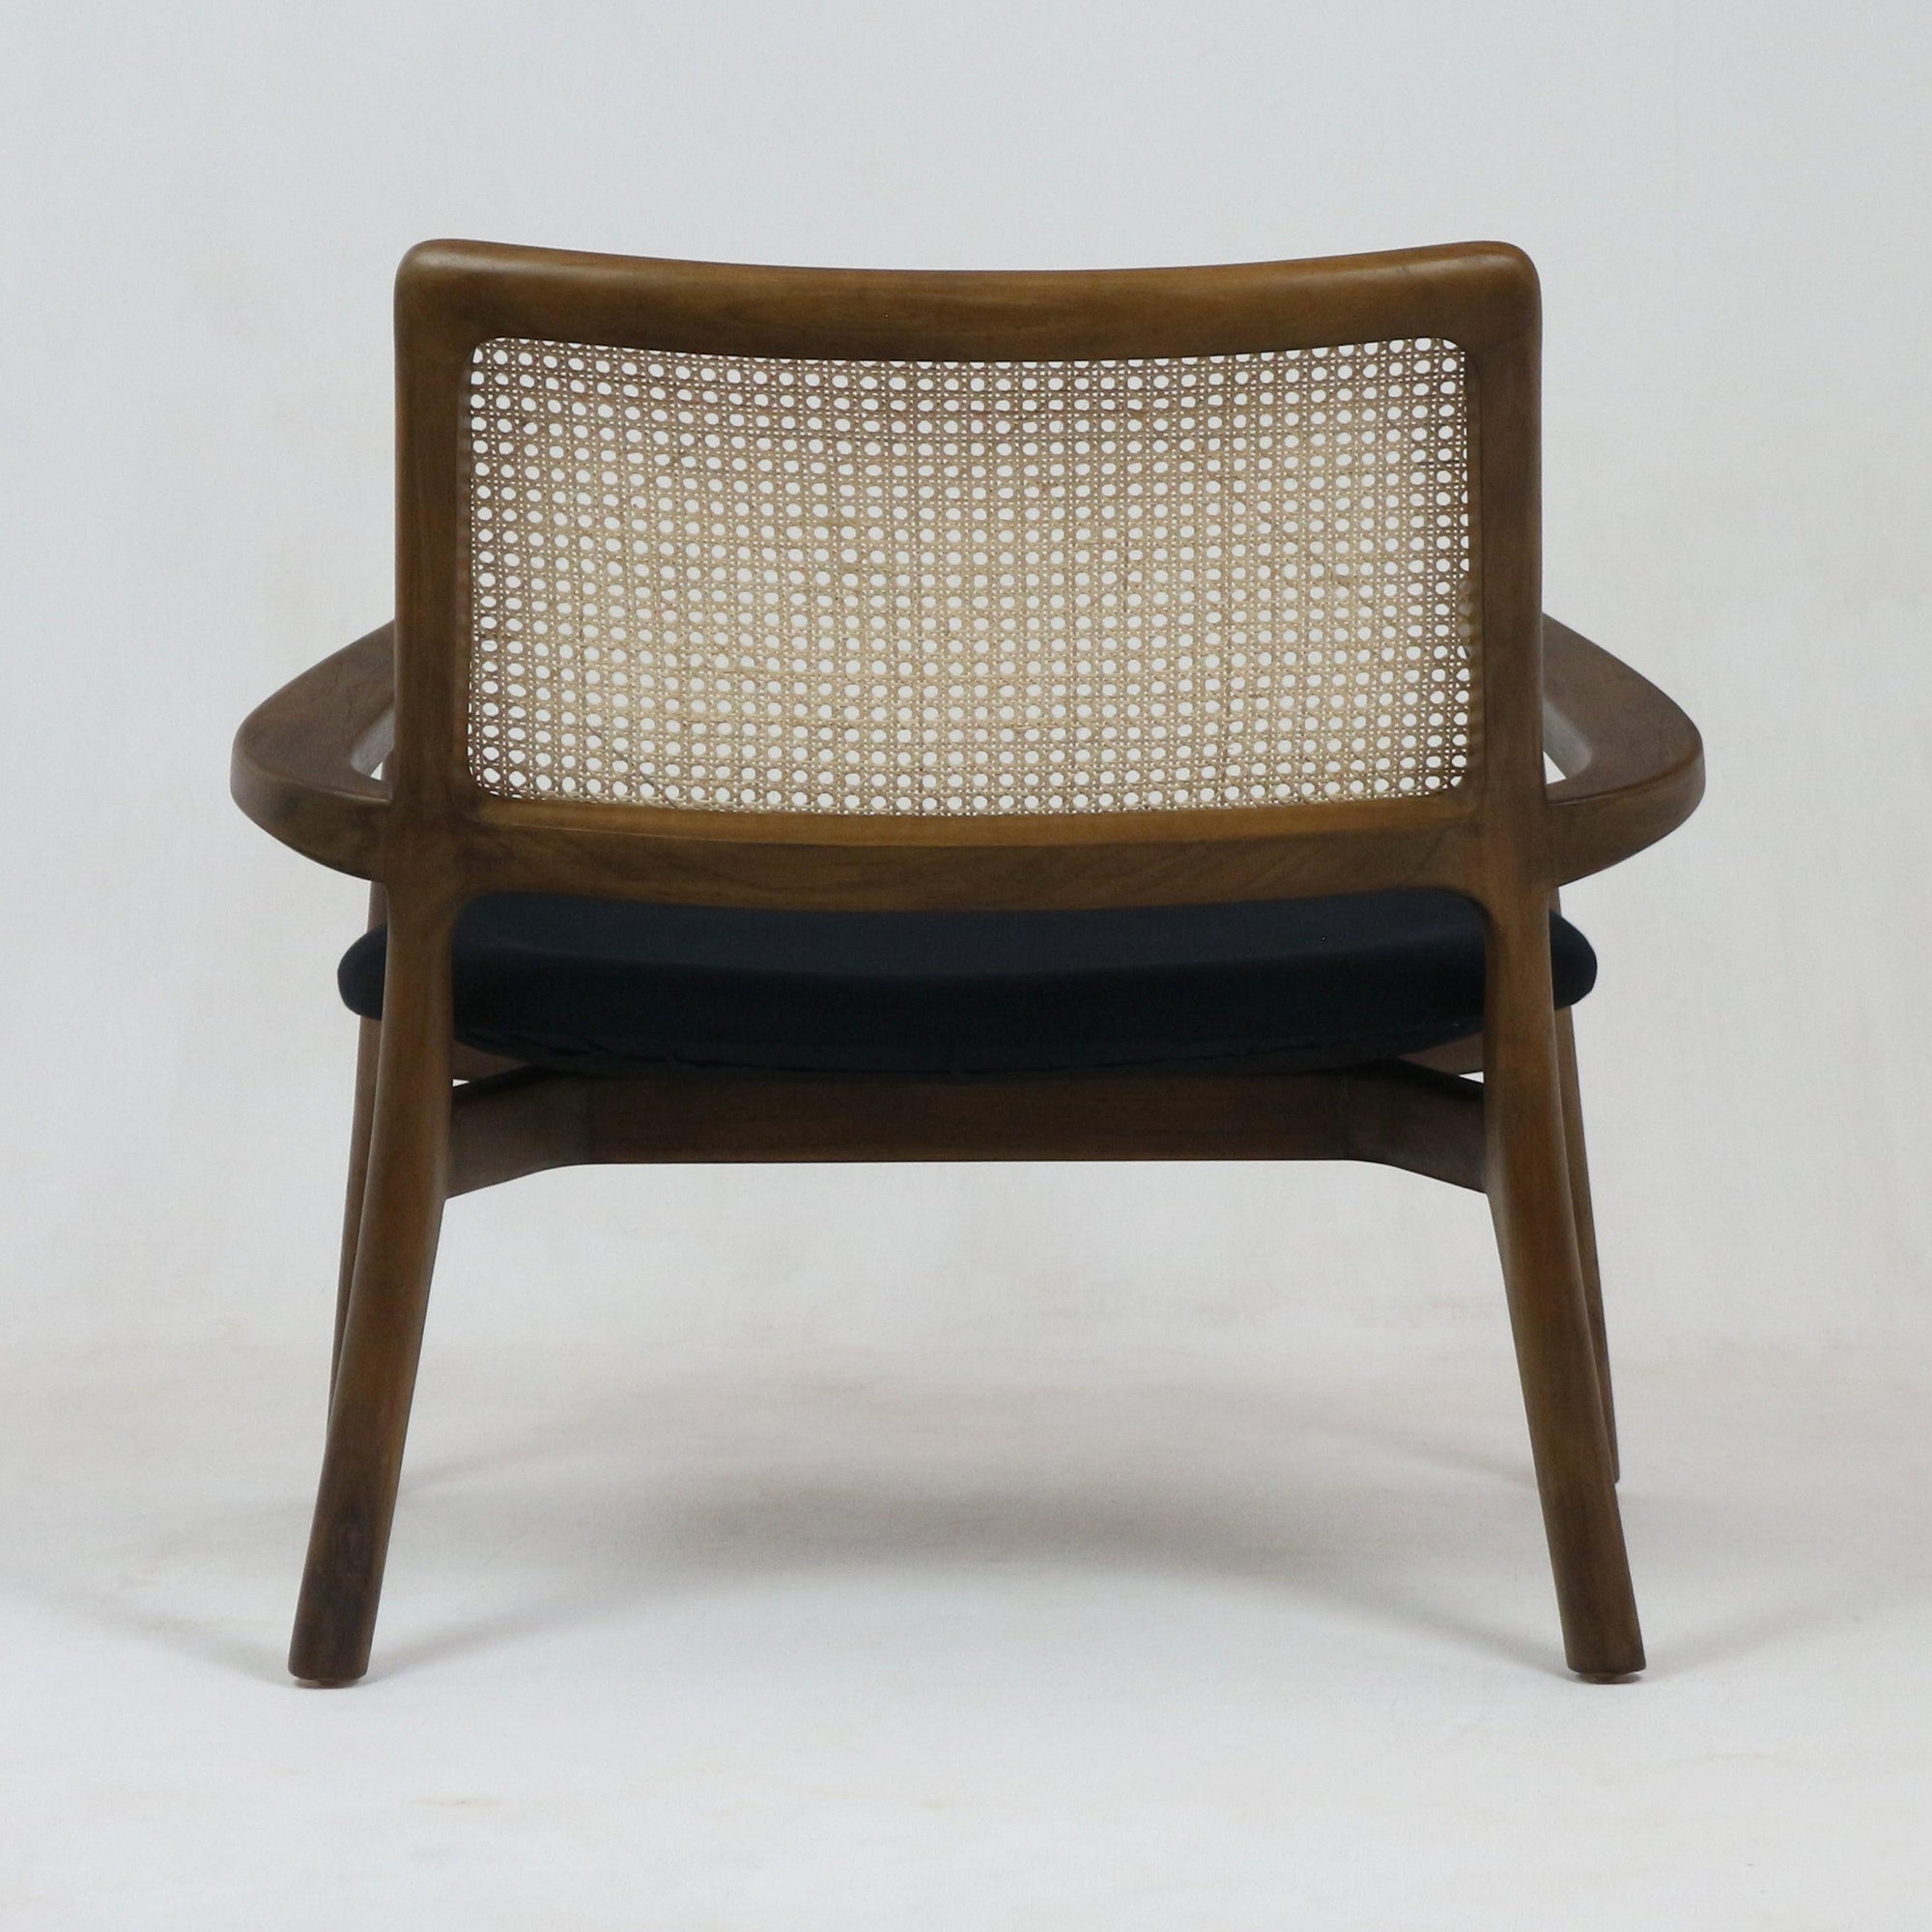 Tulip lounge chair in Teak - INTERIORTONIC